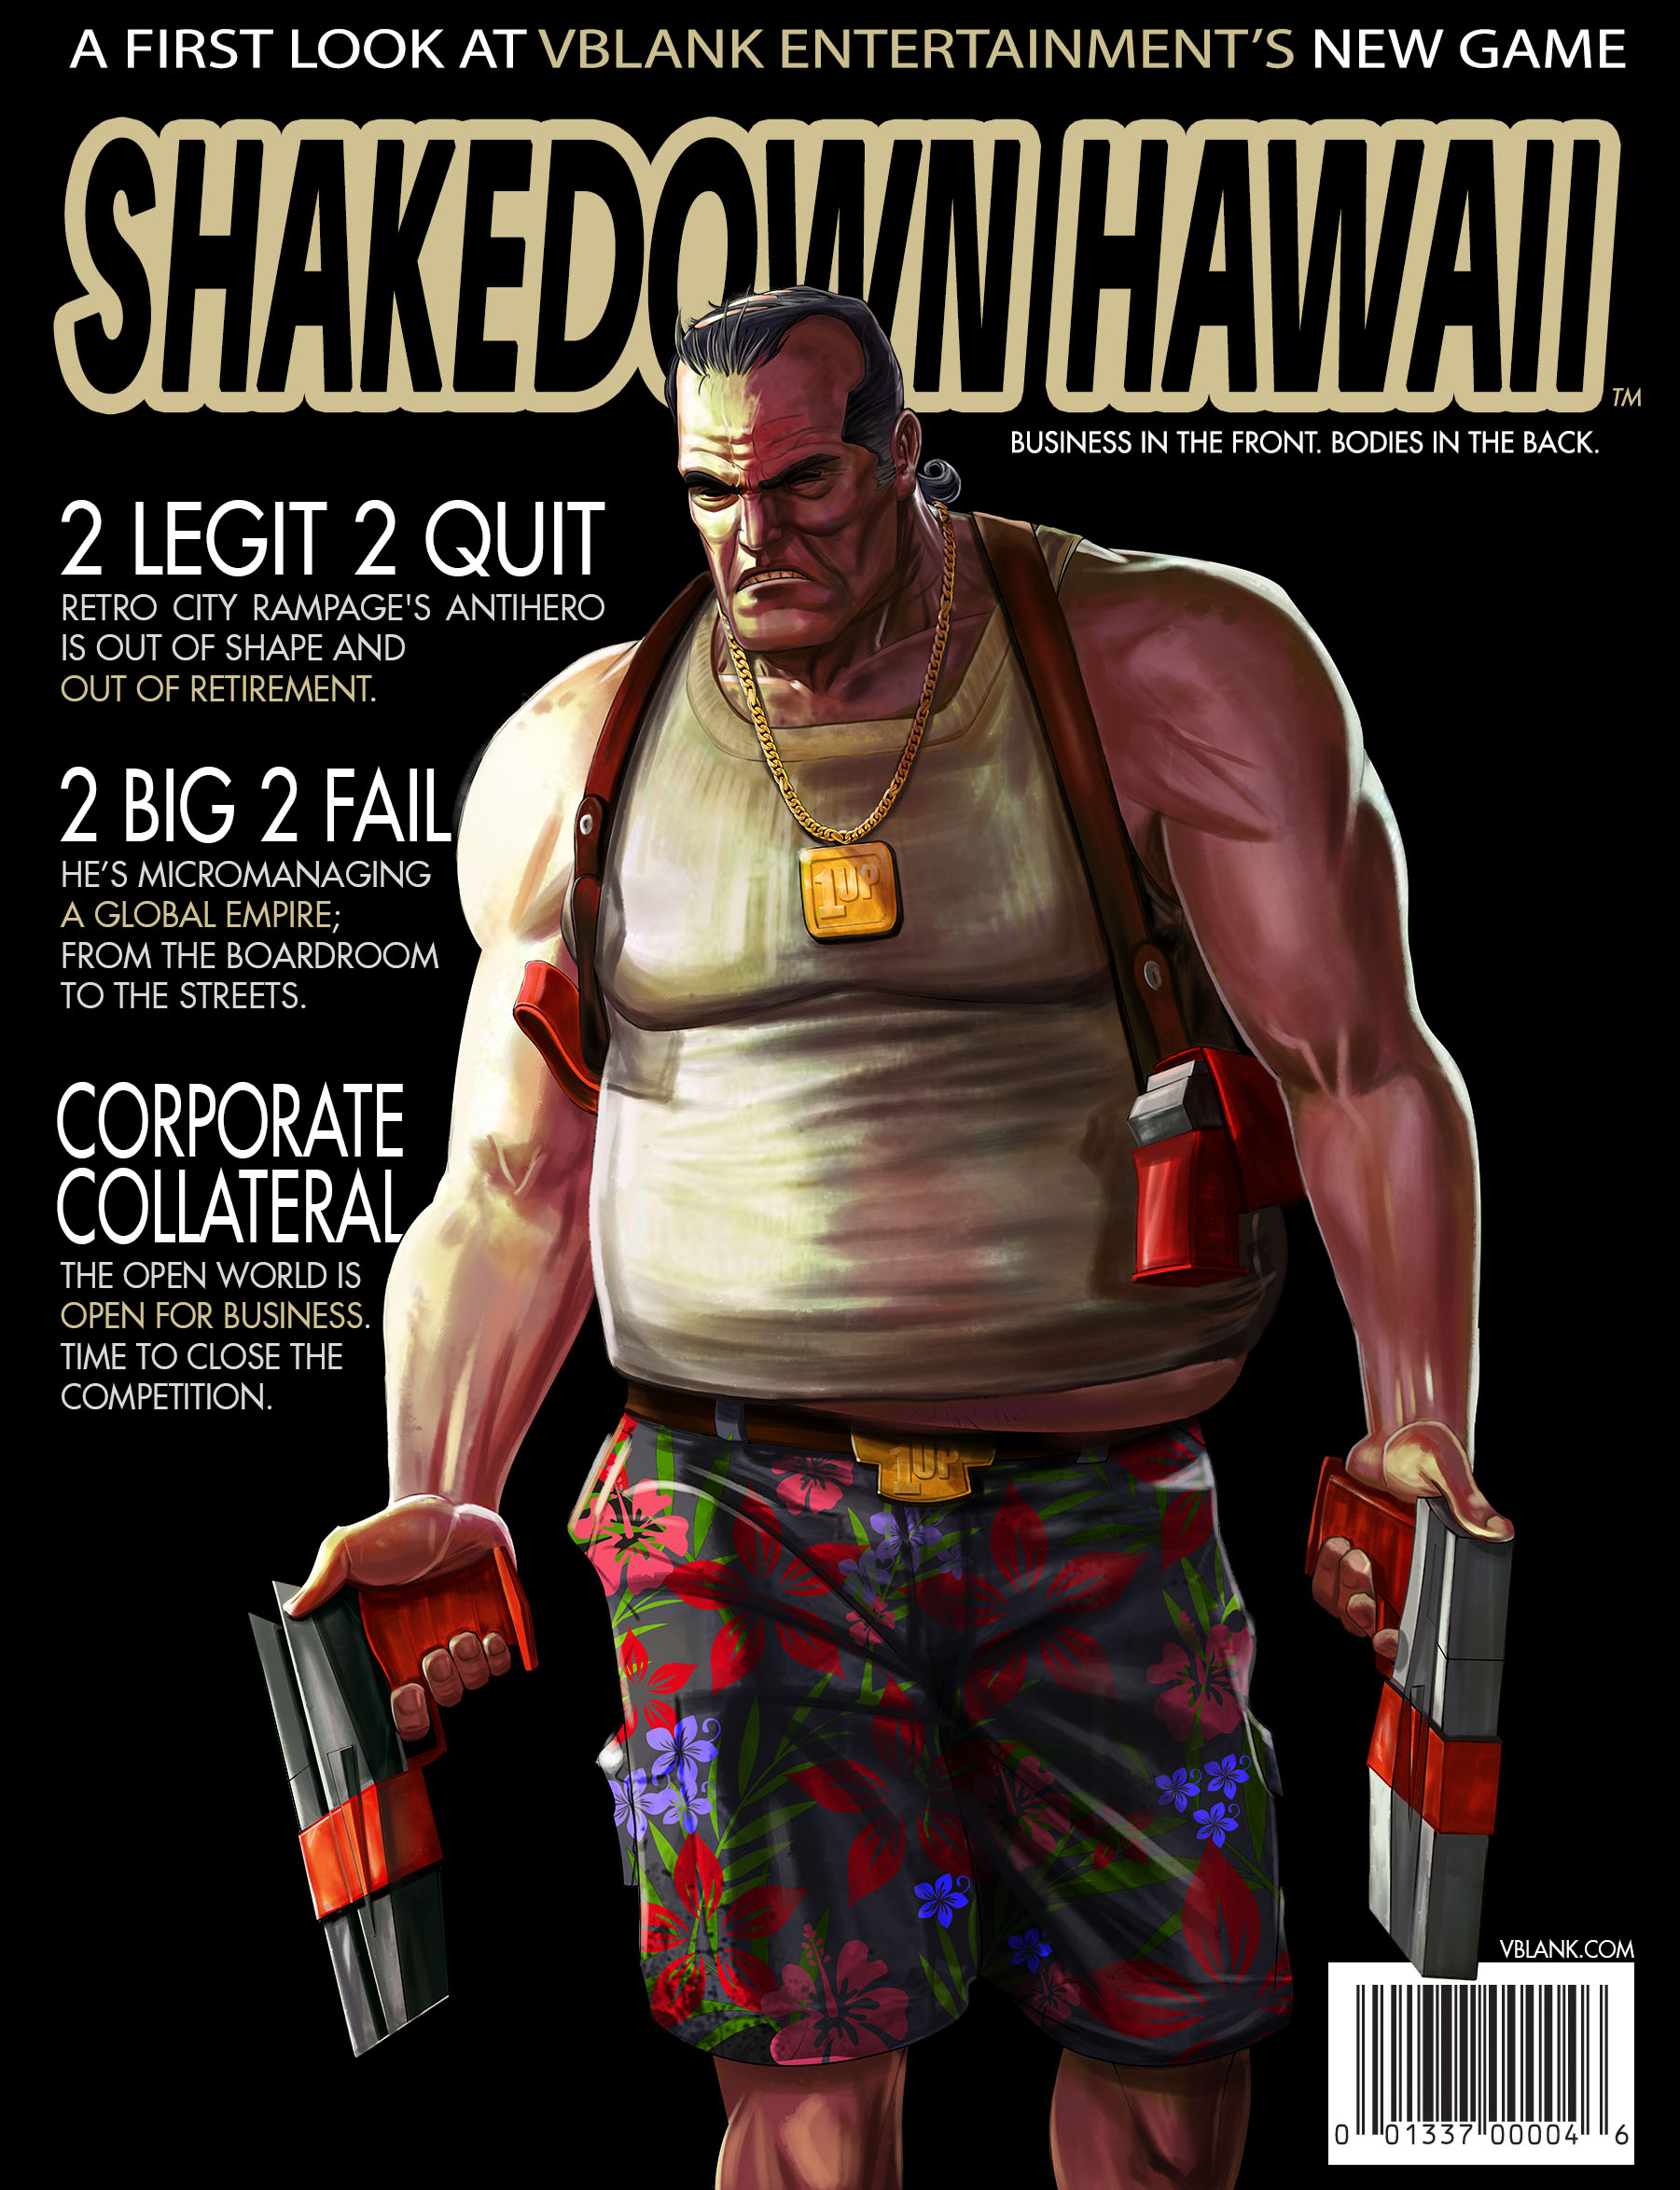 shakedown-hawaii-poster